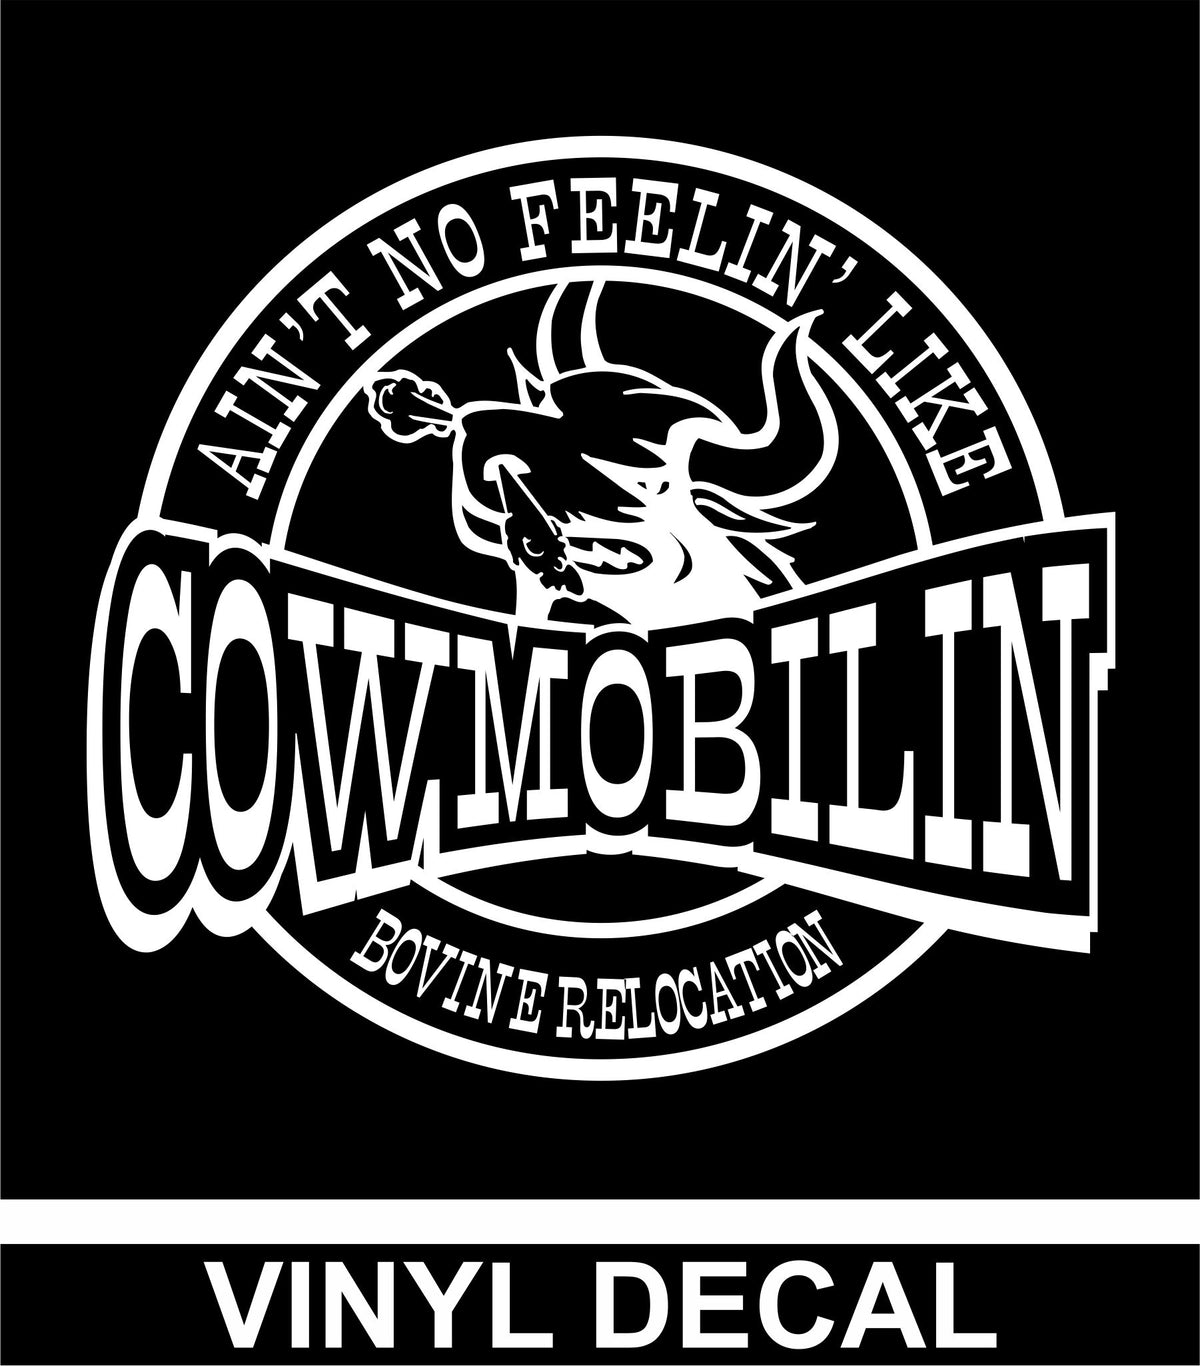 Ain't No Feelin' Like Cowmobilin' Bovine Vinyl Decal Free Shipping